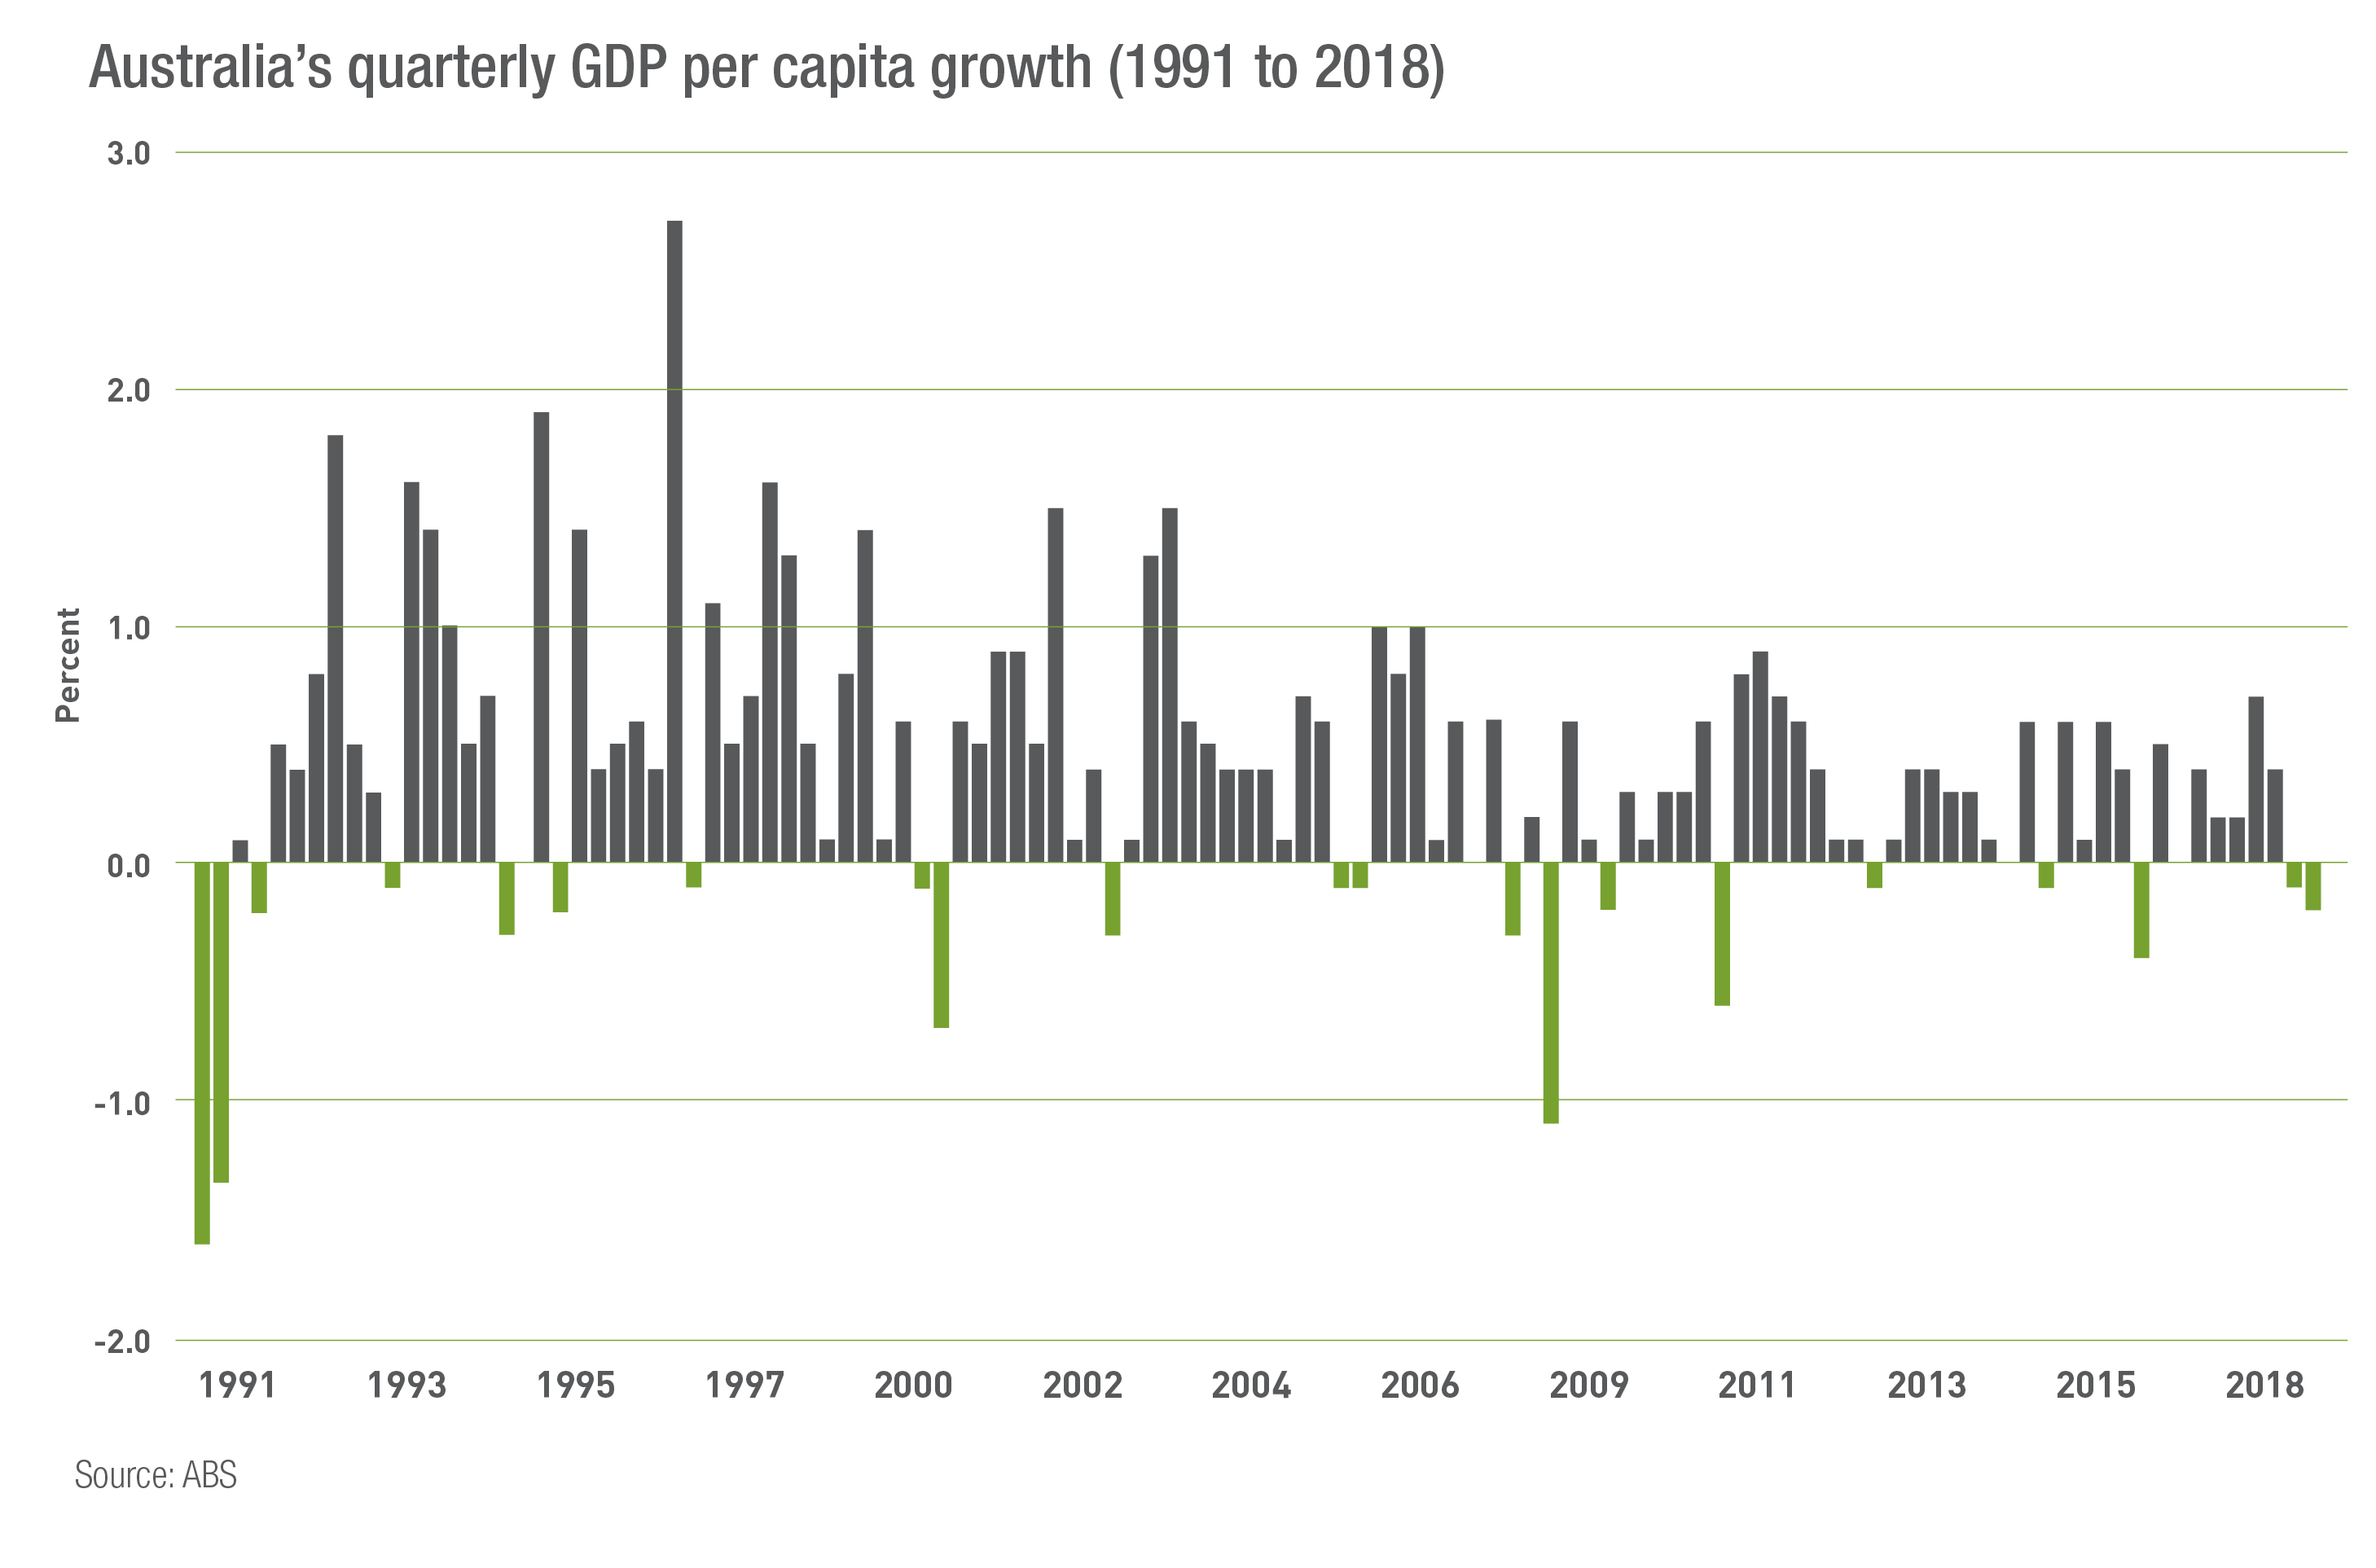 Australia's quarterly GDP per capita growth 1991 to 2018 graph